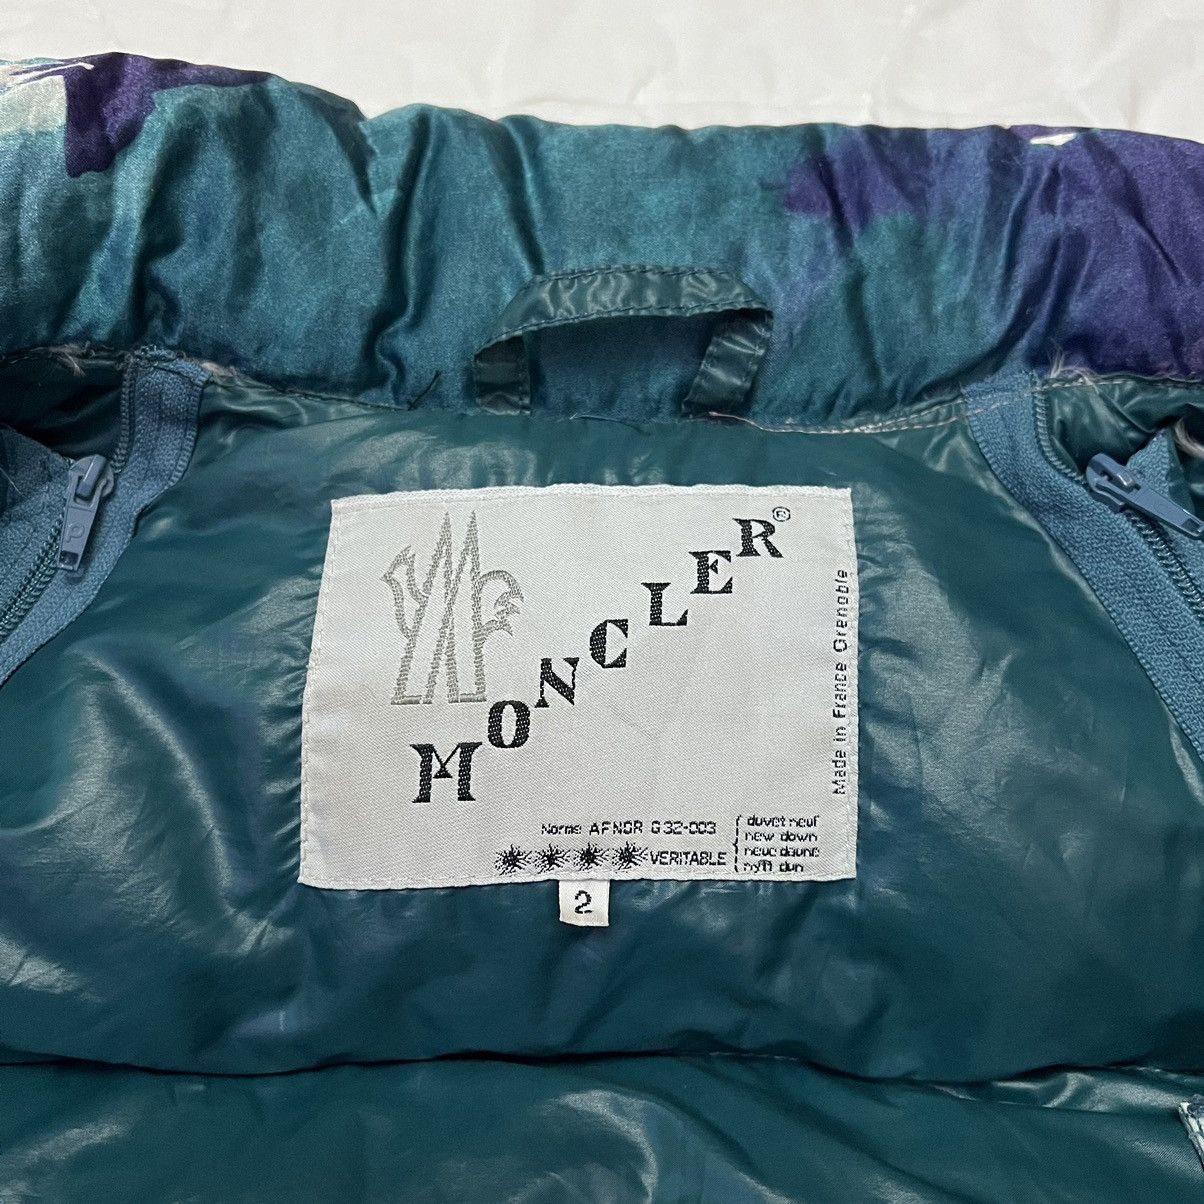 Moncler Moncler Grenoble rare vintage down jacket Size US M / EU 48-50 / 2 - 11 Thumbnail